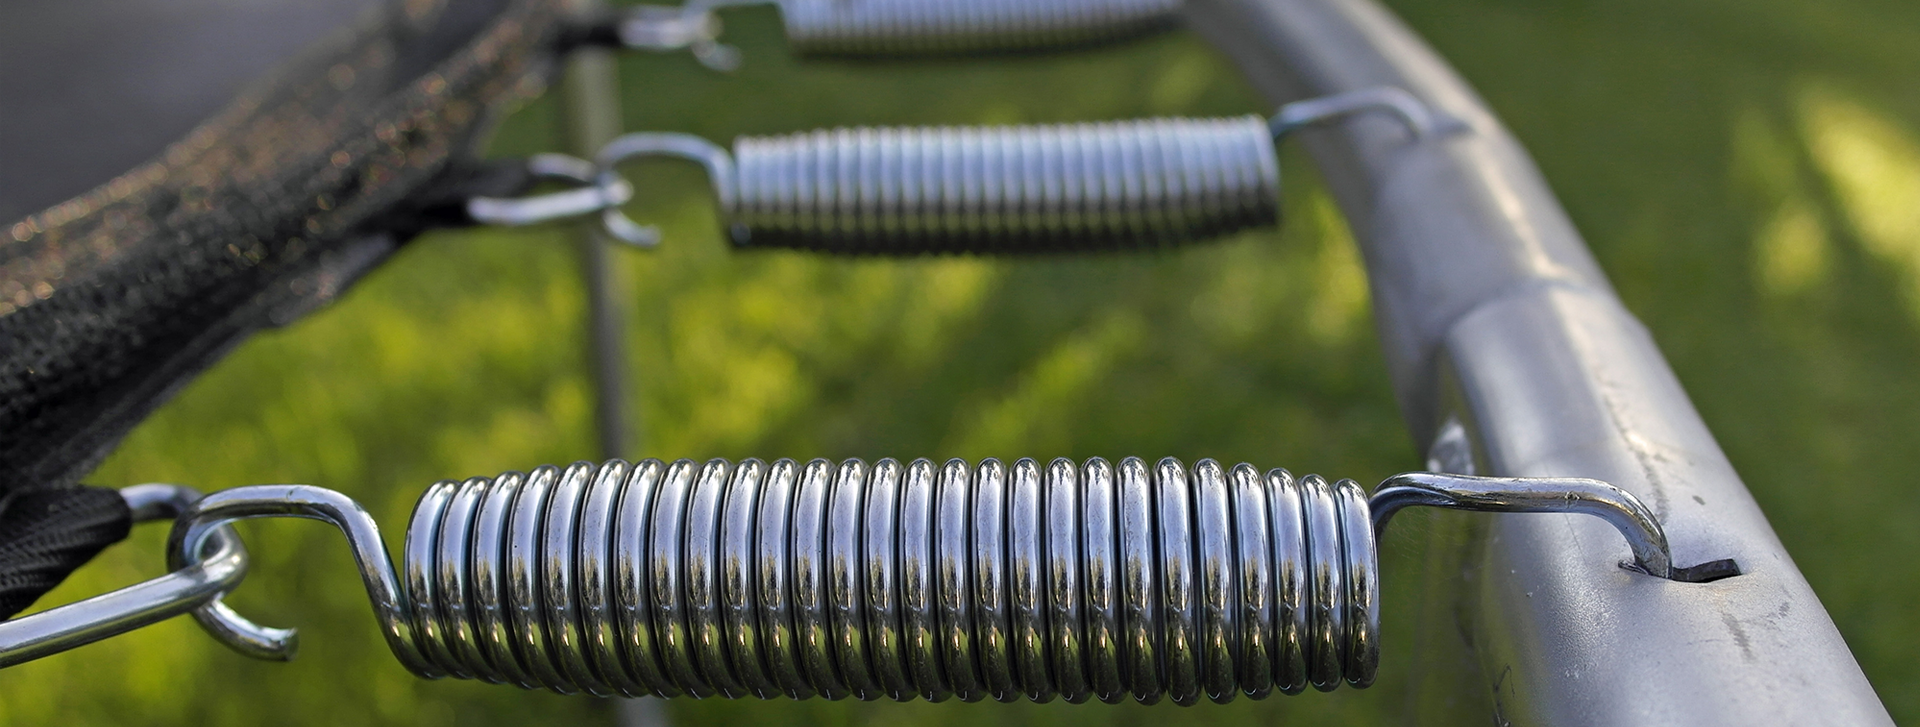 Types of coil springs like trampoline springs